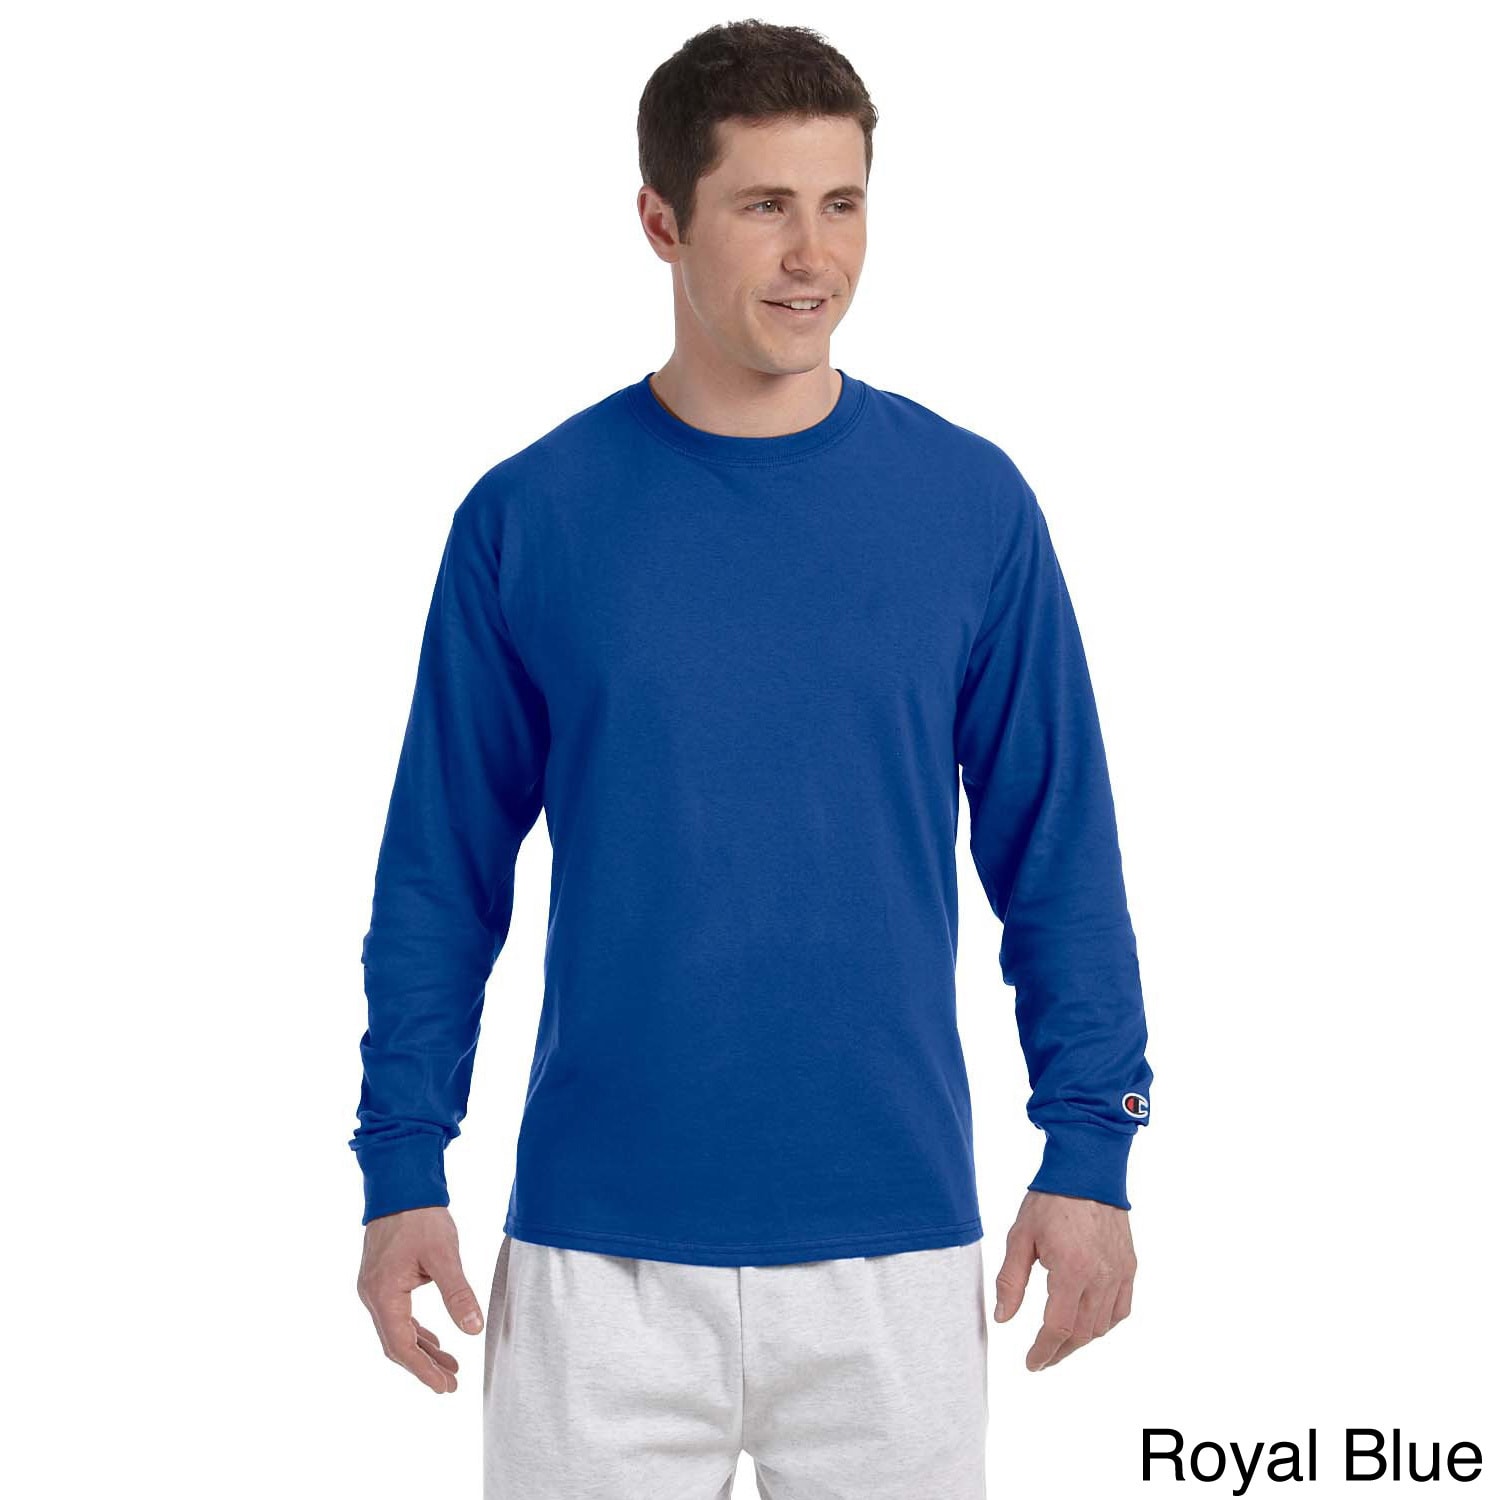 royal blue champion long sleeve